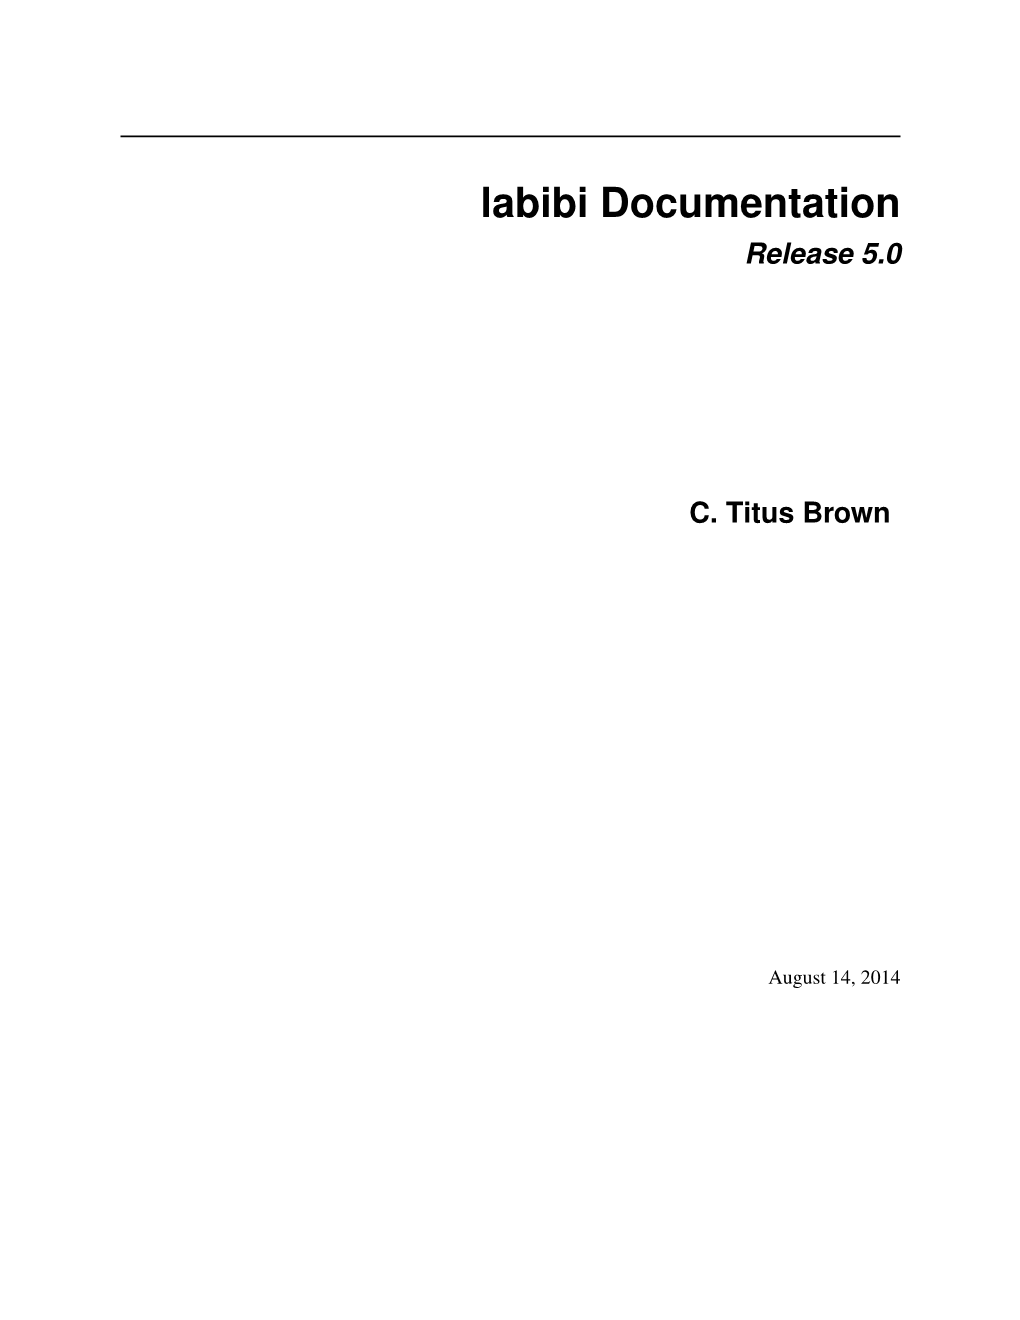 Labibi Documentation Release 5.0